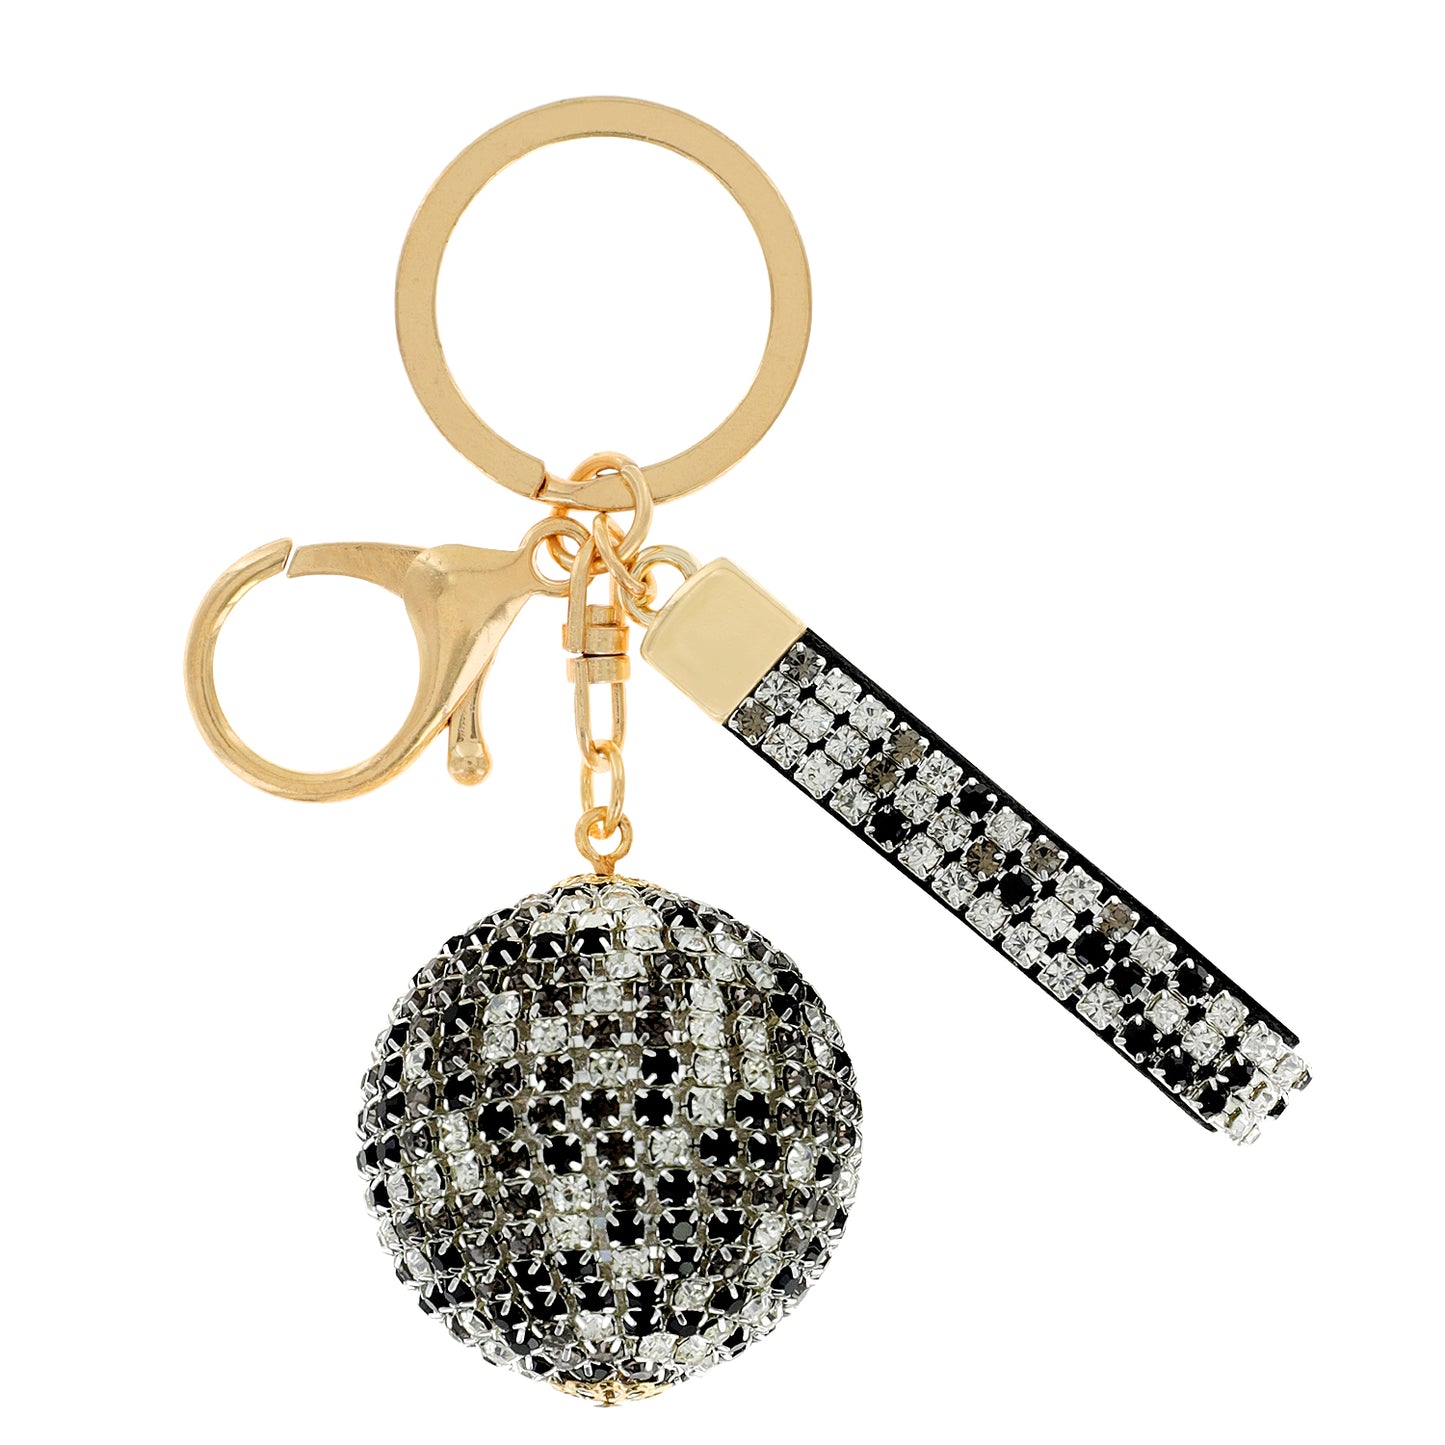 Fashion Rhinestone Ball Key Chain with Wristlet - Black/White